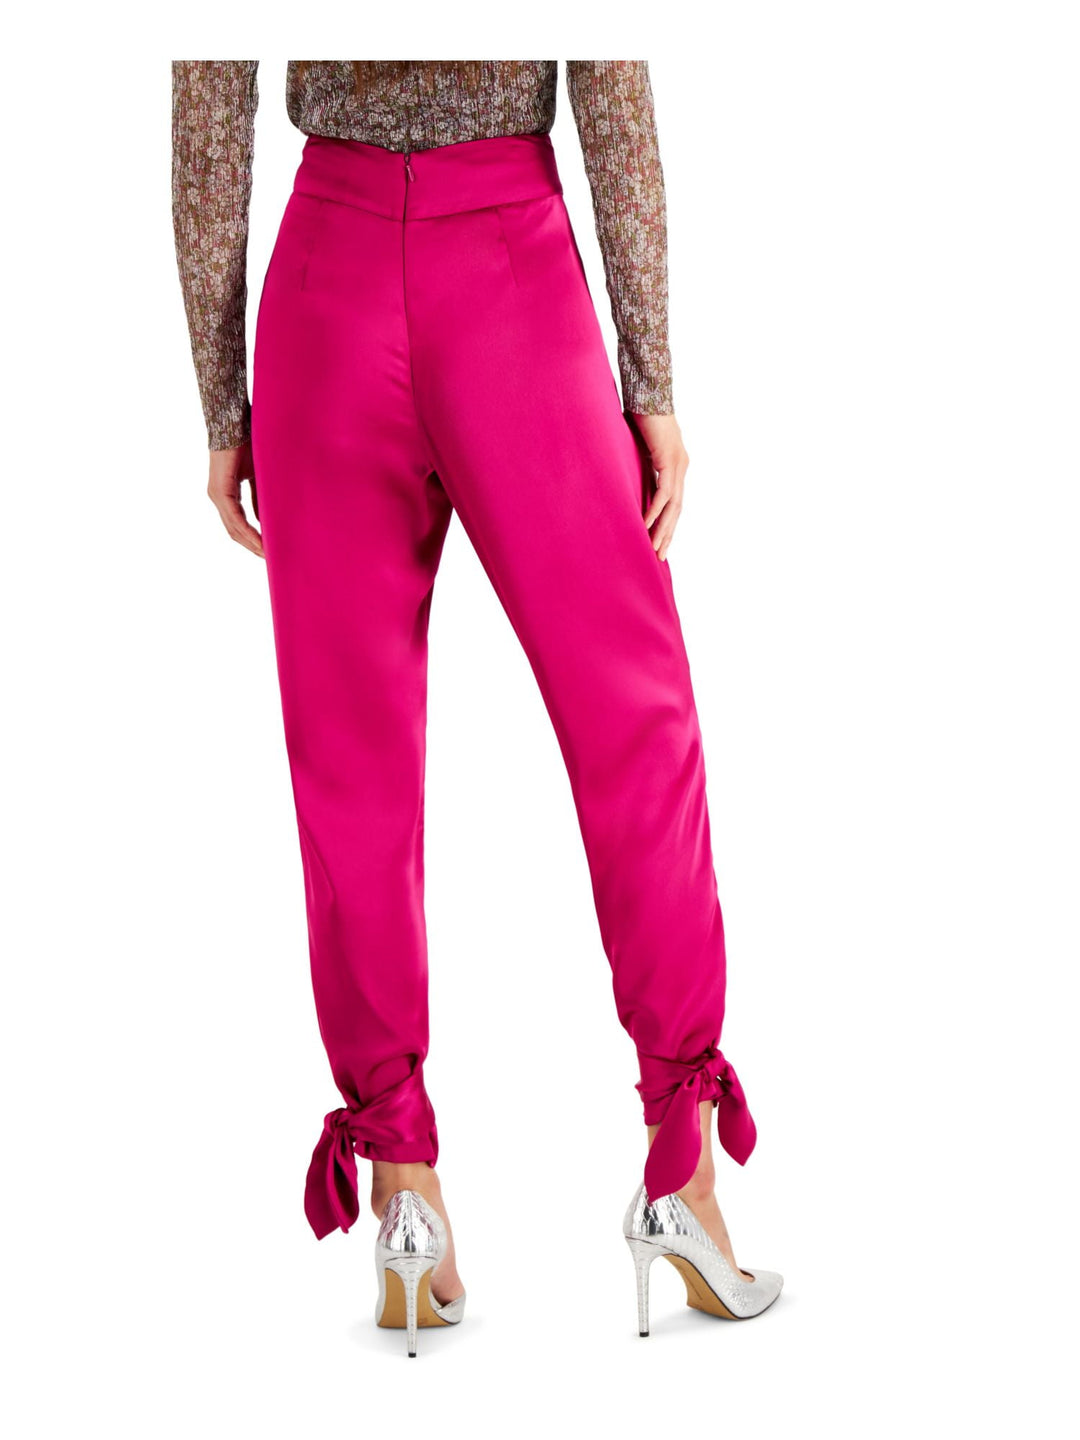 INC International Concepts Women's Satin Tie-Bottom Pants Pink Size 10